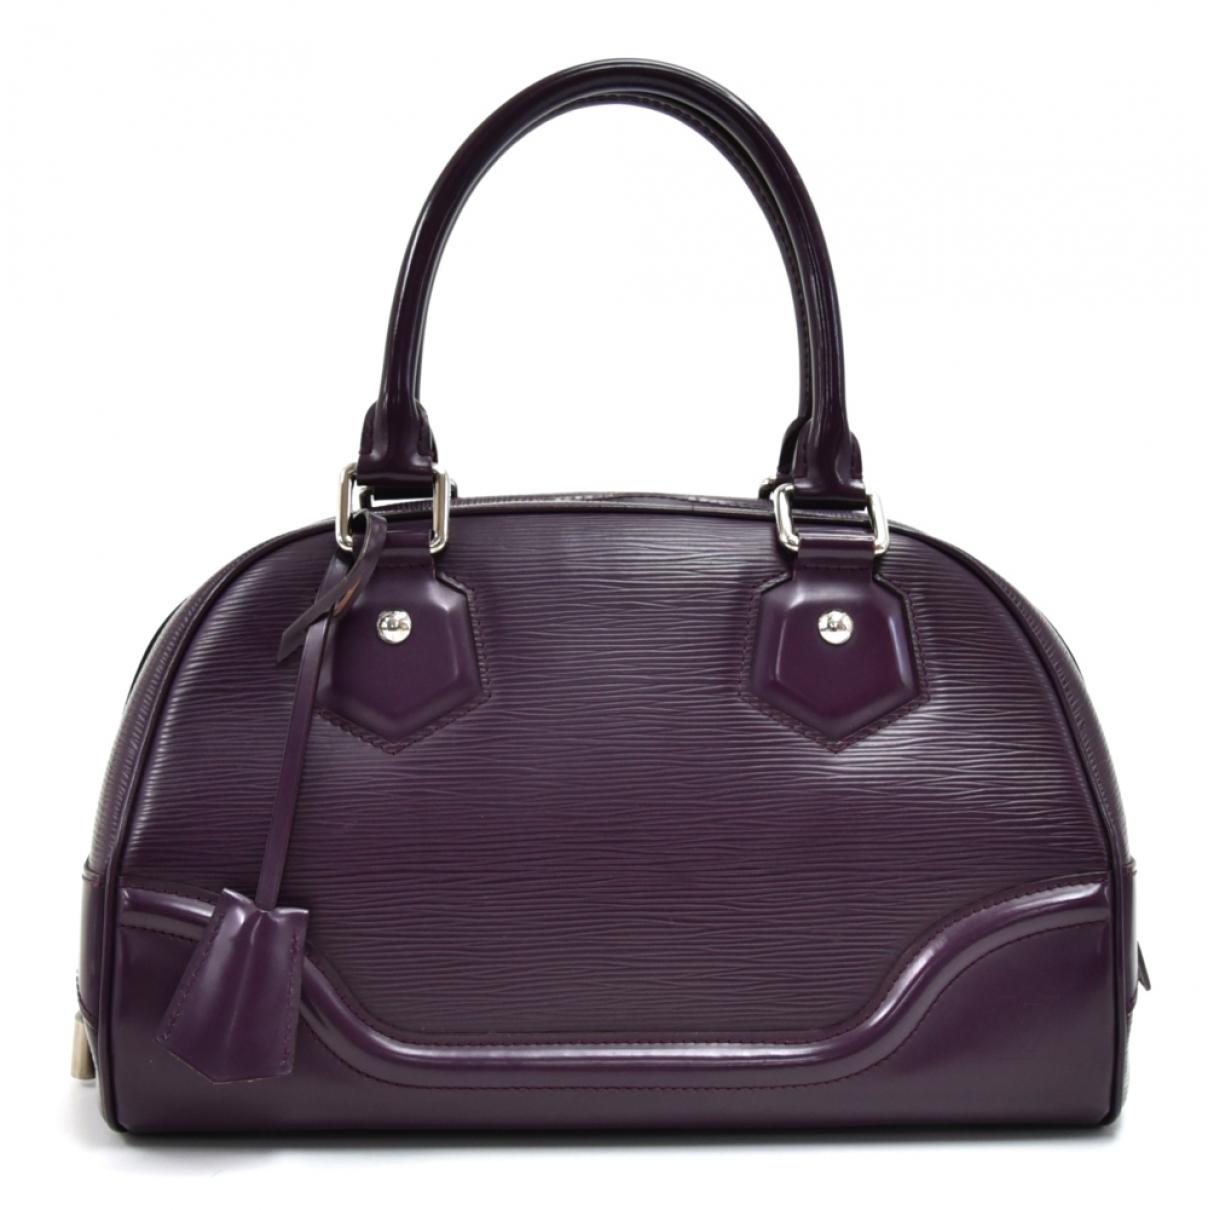 Lyst - Louis Vuitton Montaigne Purple Leather Handbag in Purple